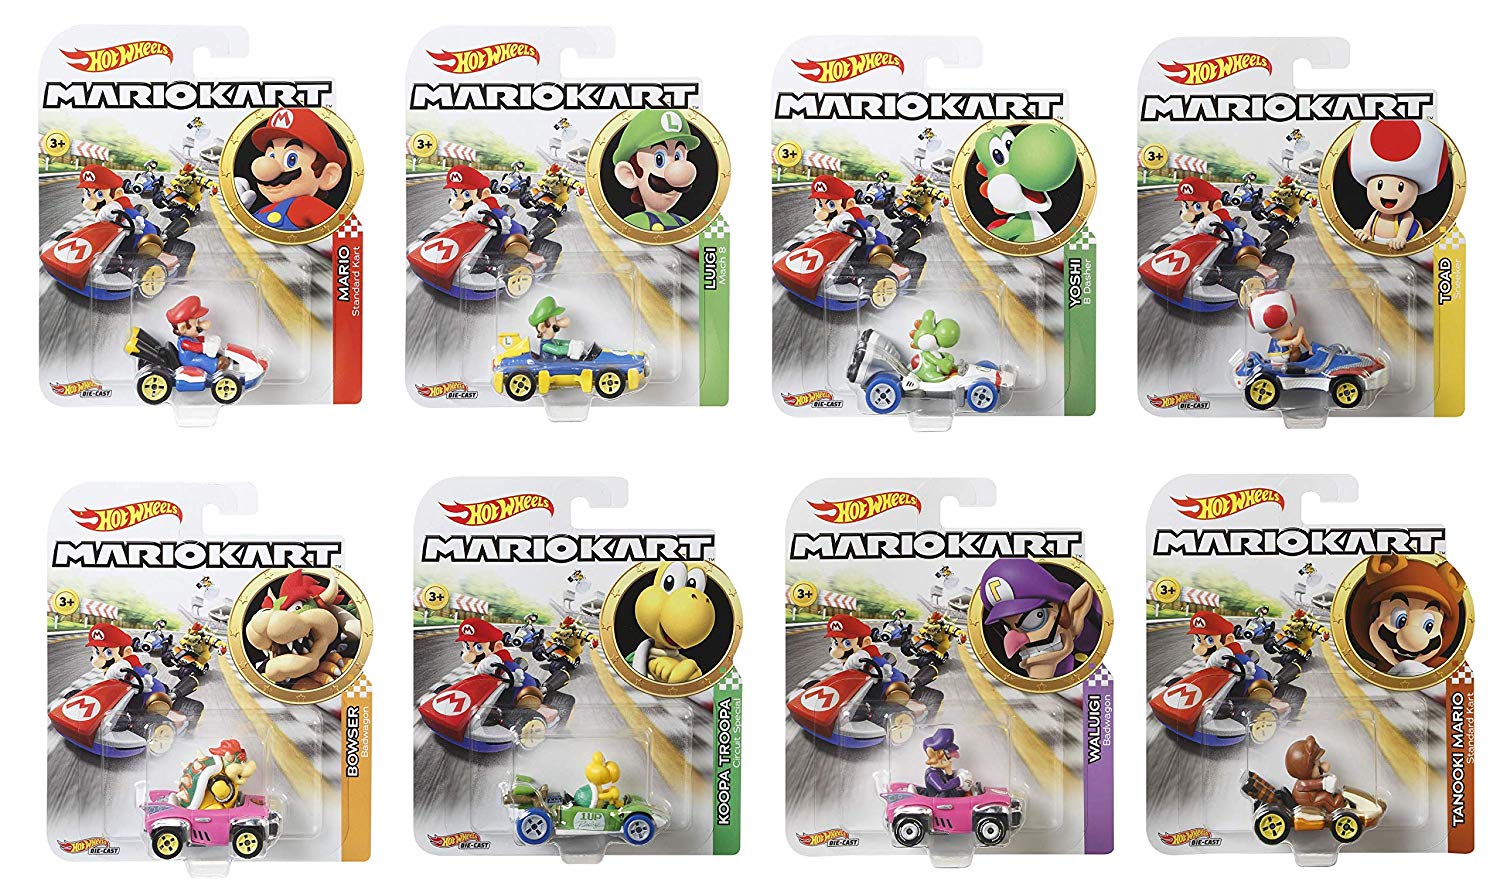 Hot Wheels X Mario Kart 2020 Toys Up For Pre Order Nintendosoup 4155